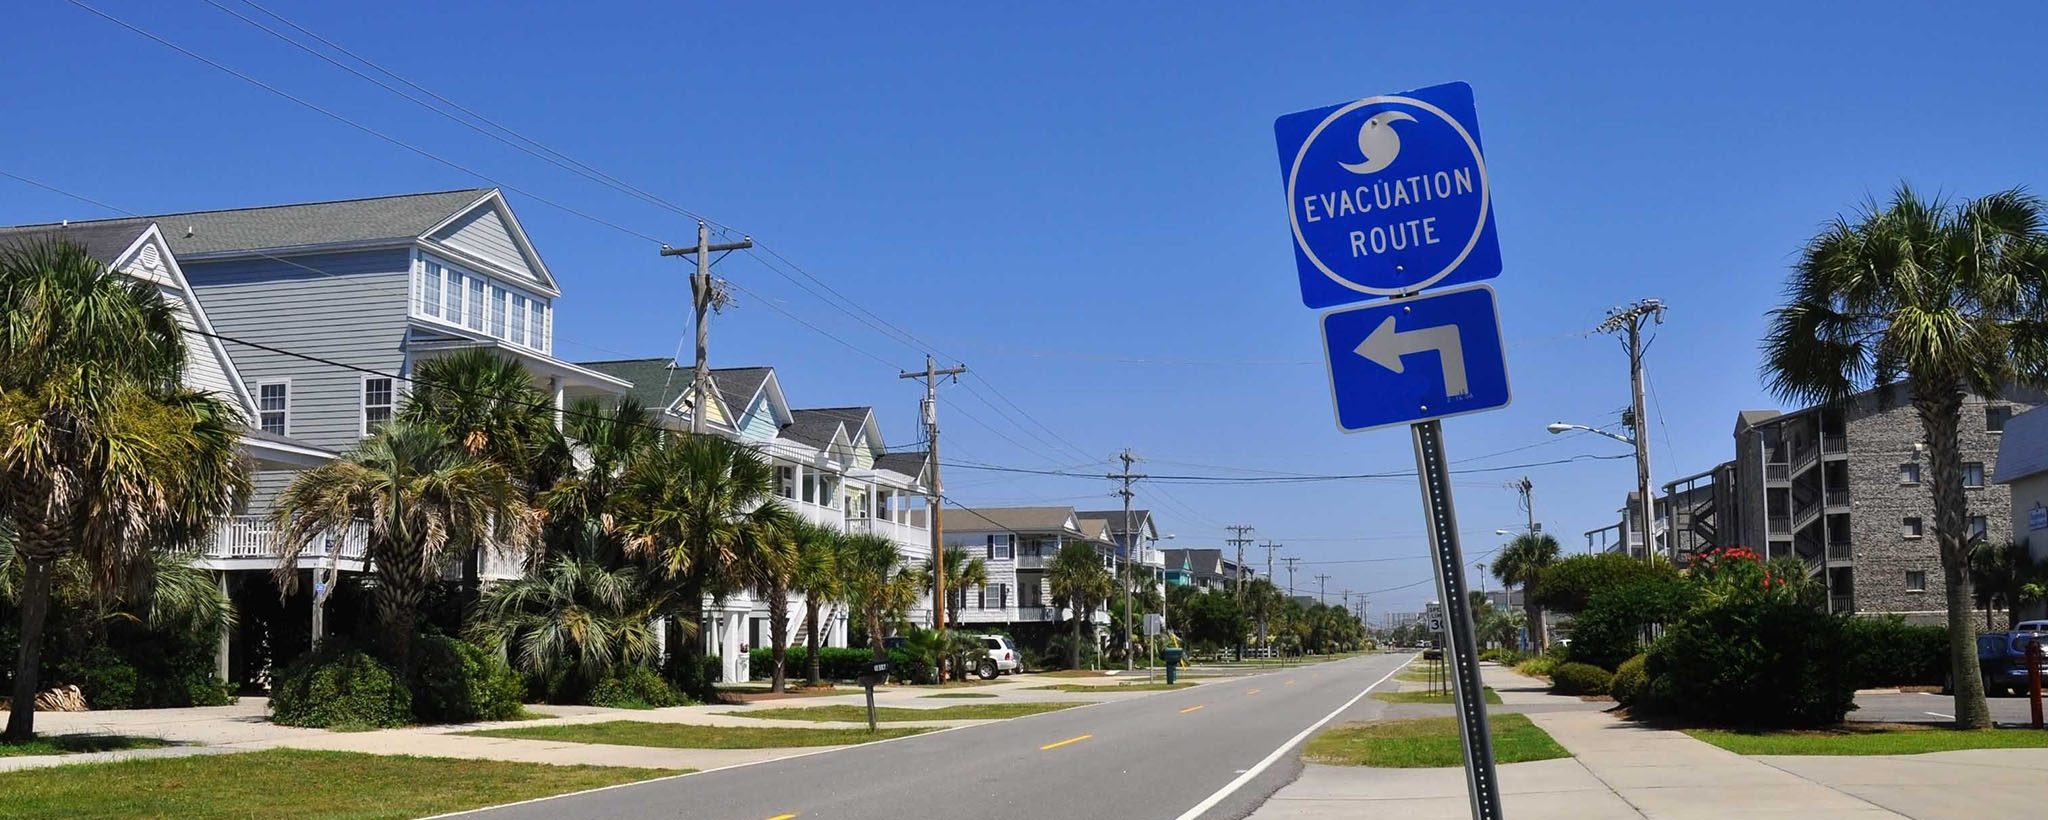 A hurricane evacuation route sign on a neighborhood street 